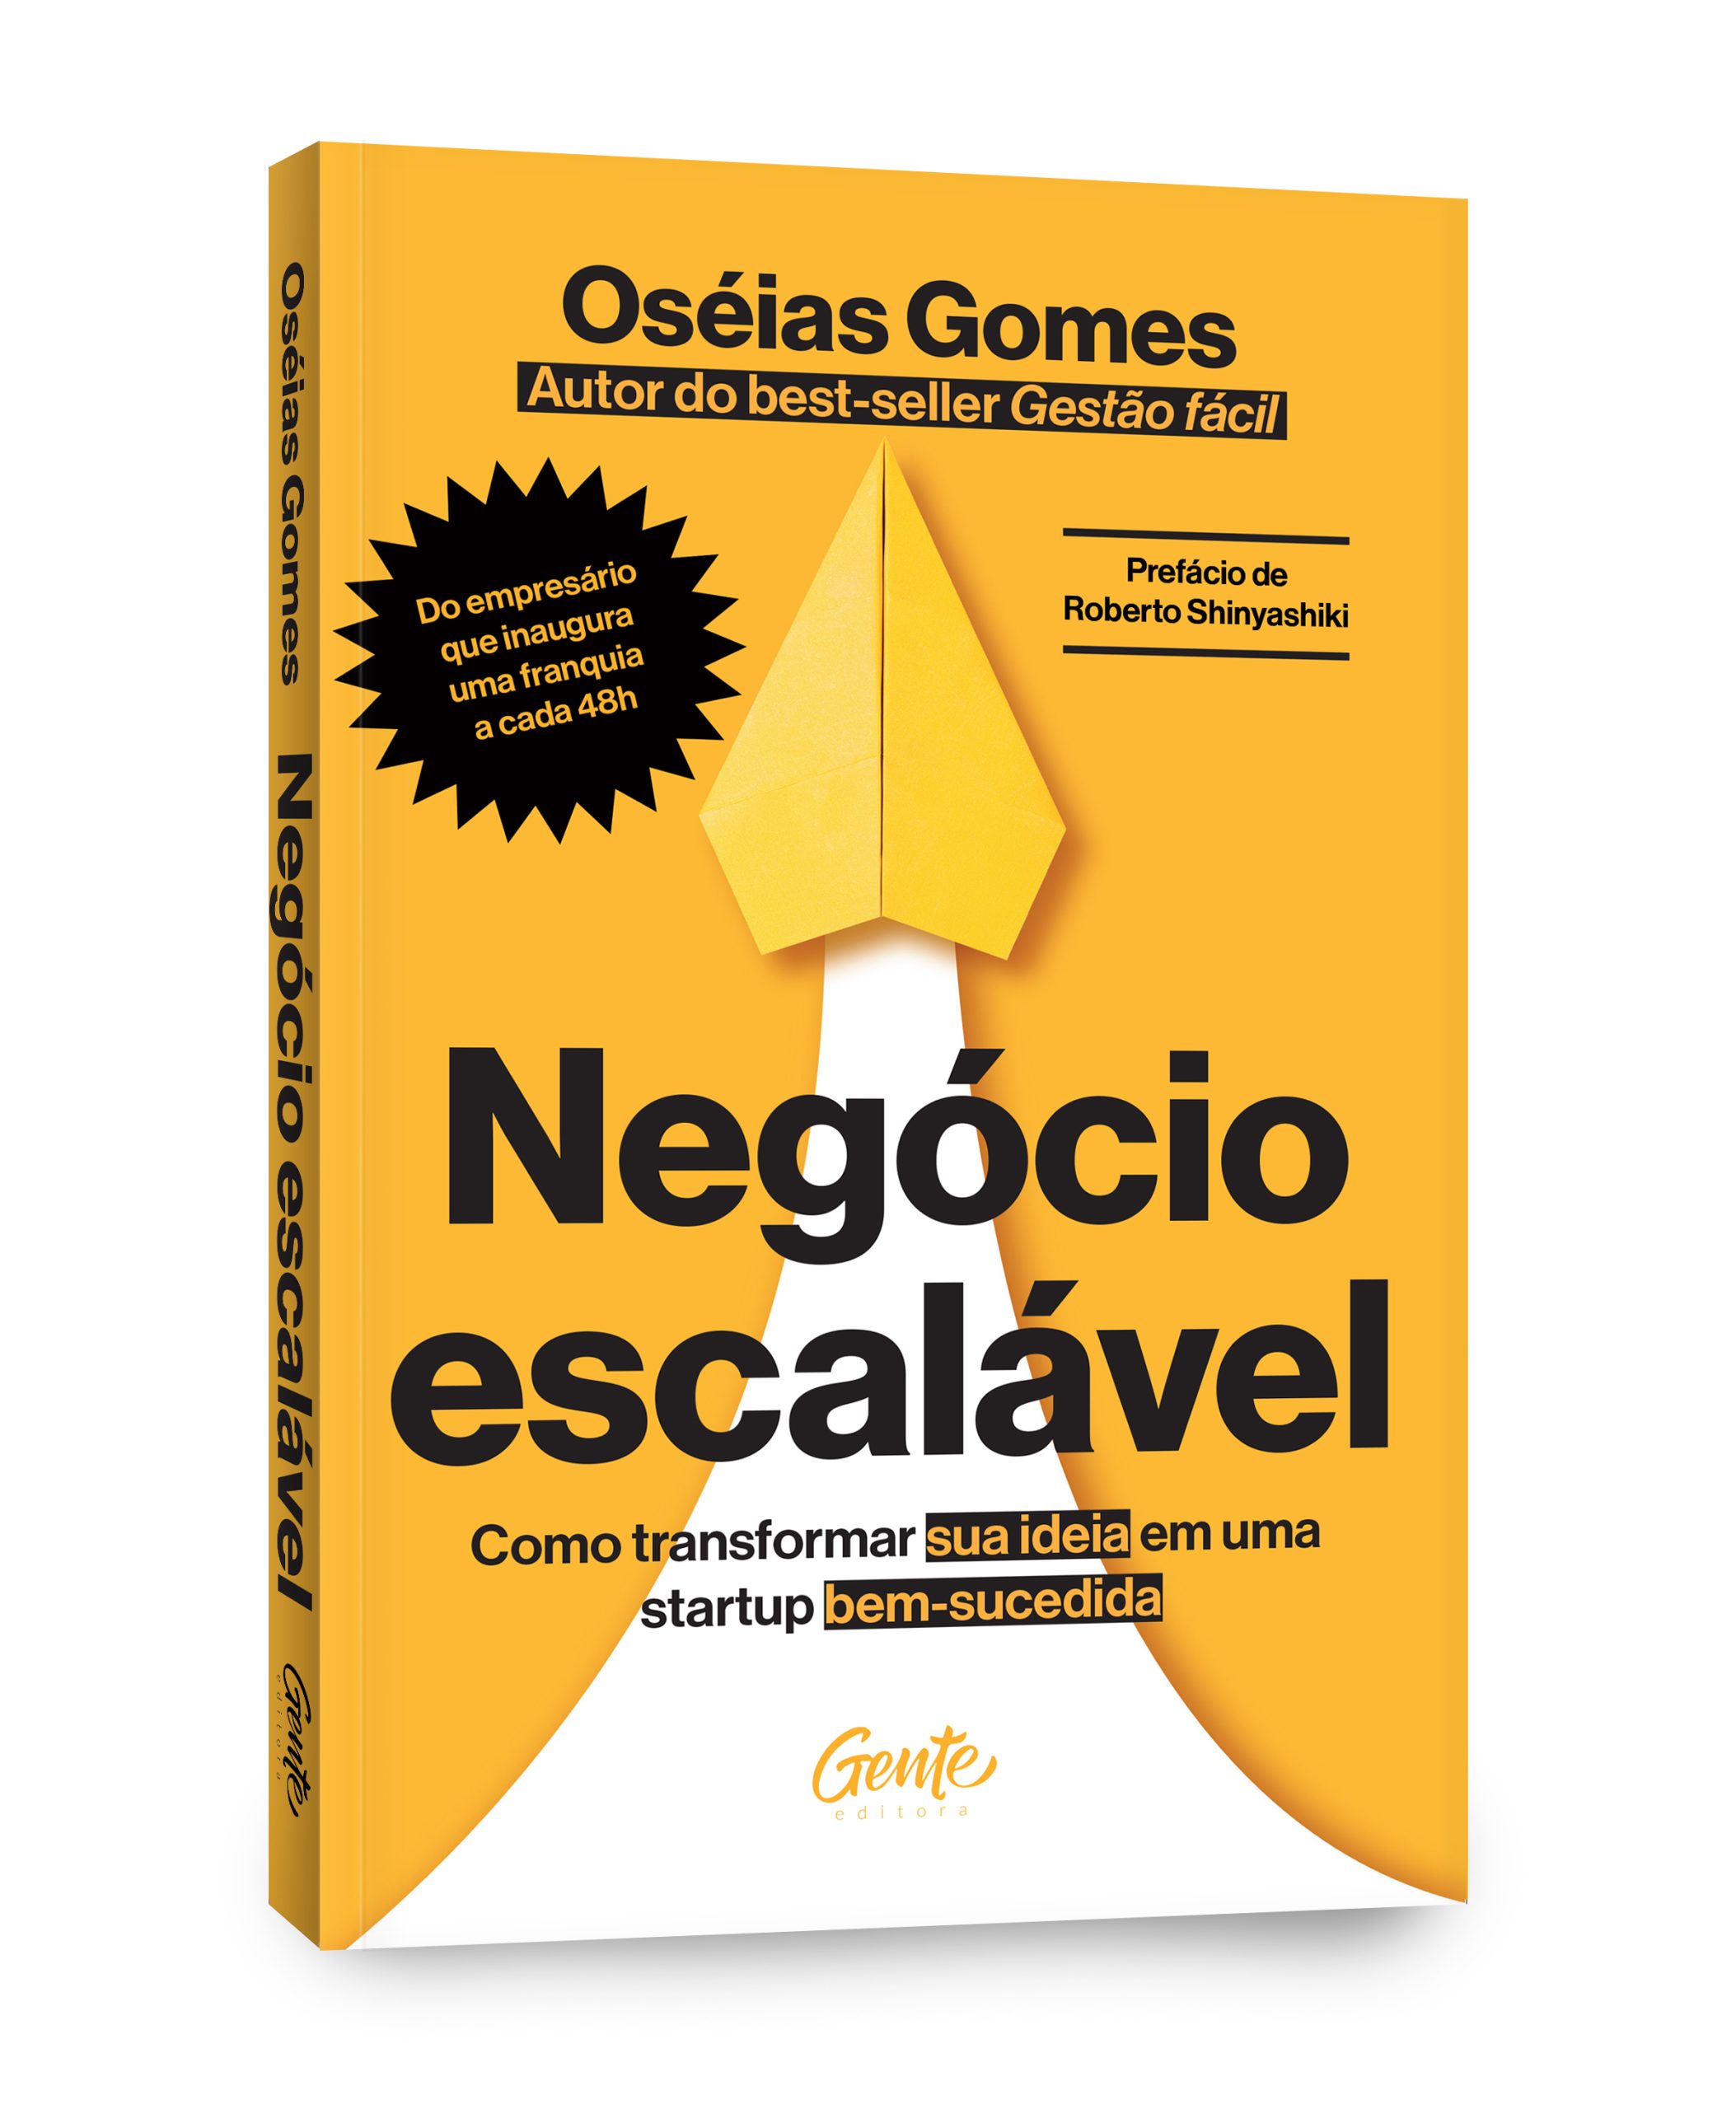 Read more about the article “Negócio Escalável” novo livro de Oséias Gomes é best-seller